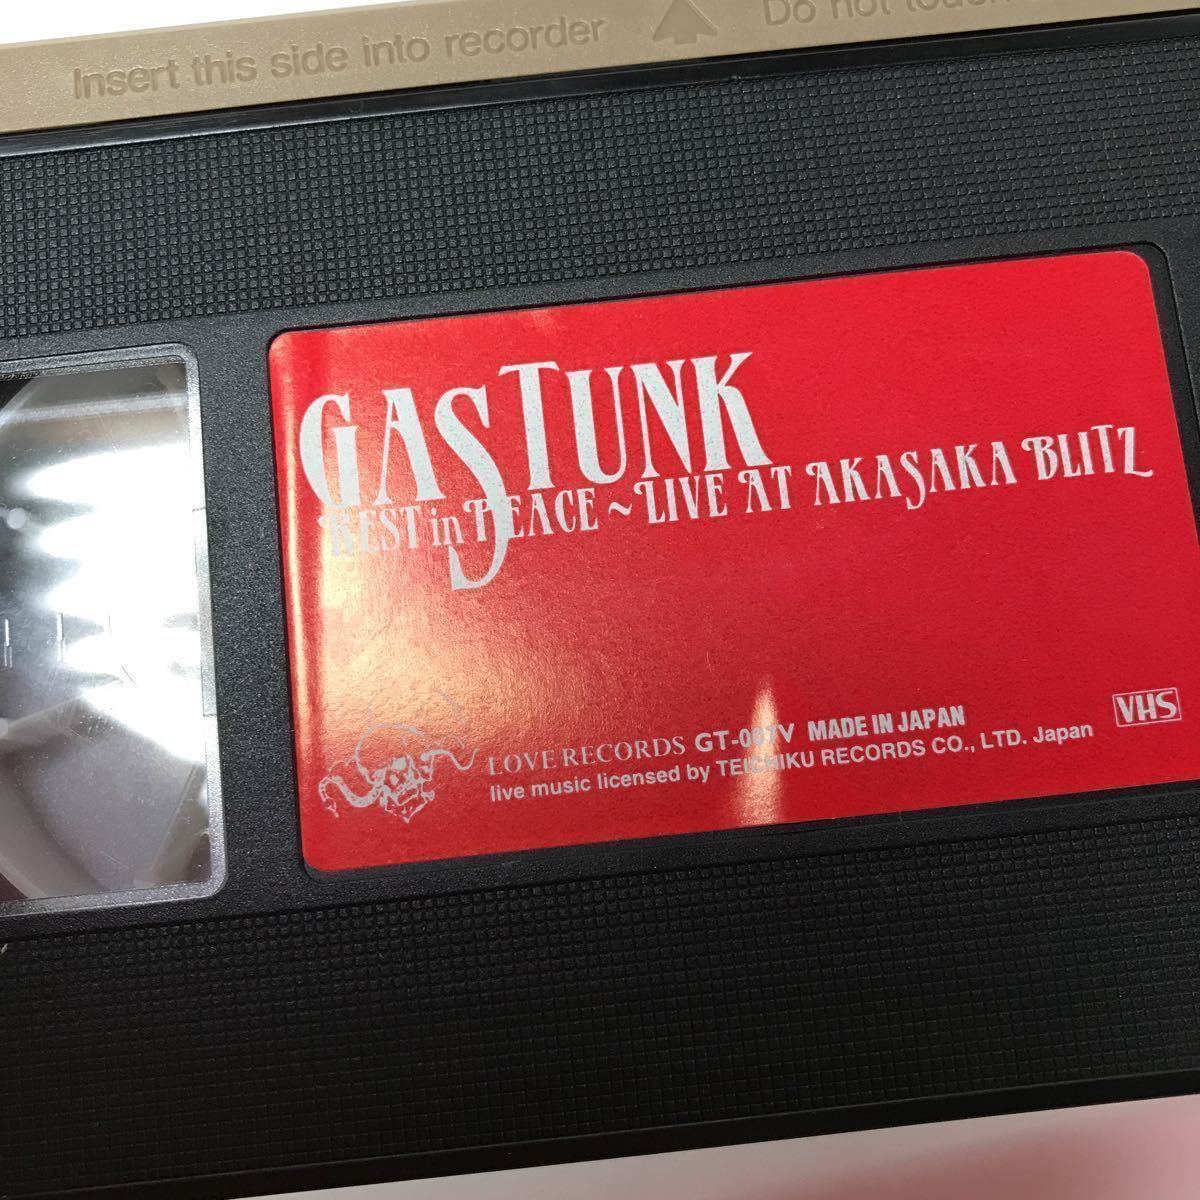  used VHS videotape GASTUNK LIVE AT AKASAKA BLITZ REST in PEACEga Stan k red slope Blitz Live 